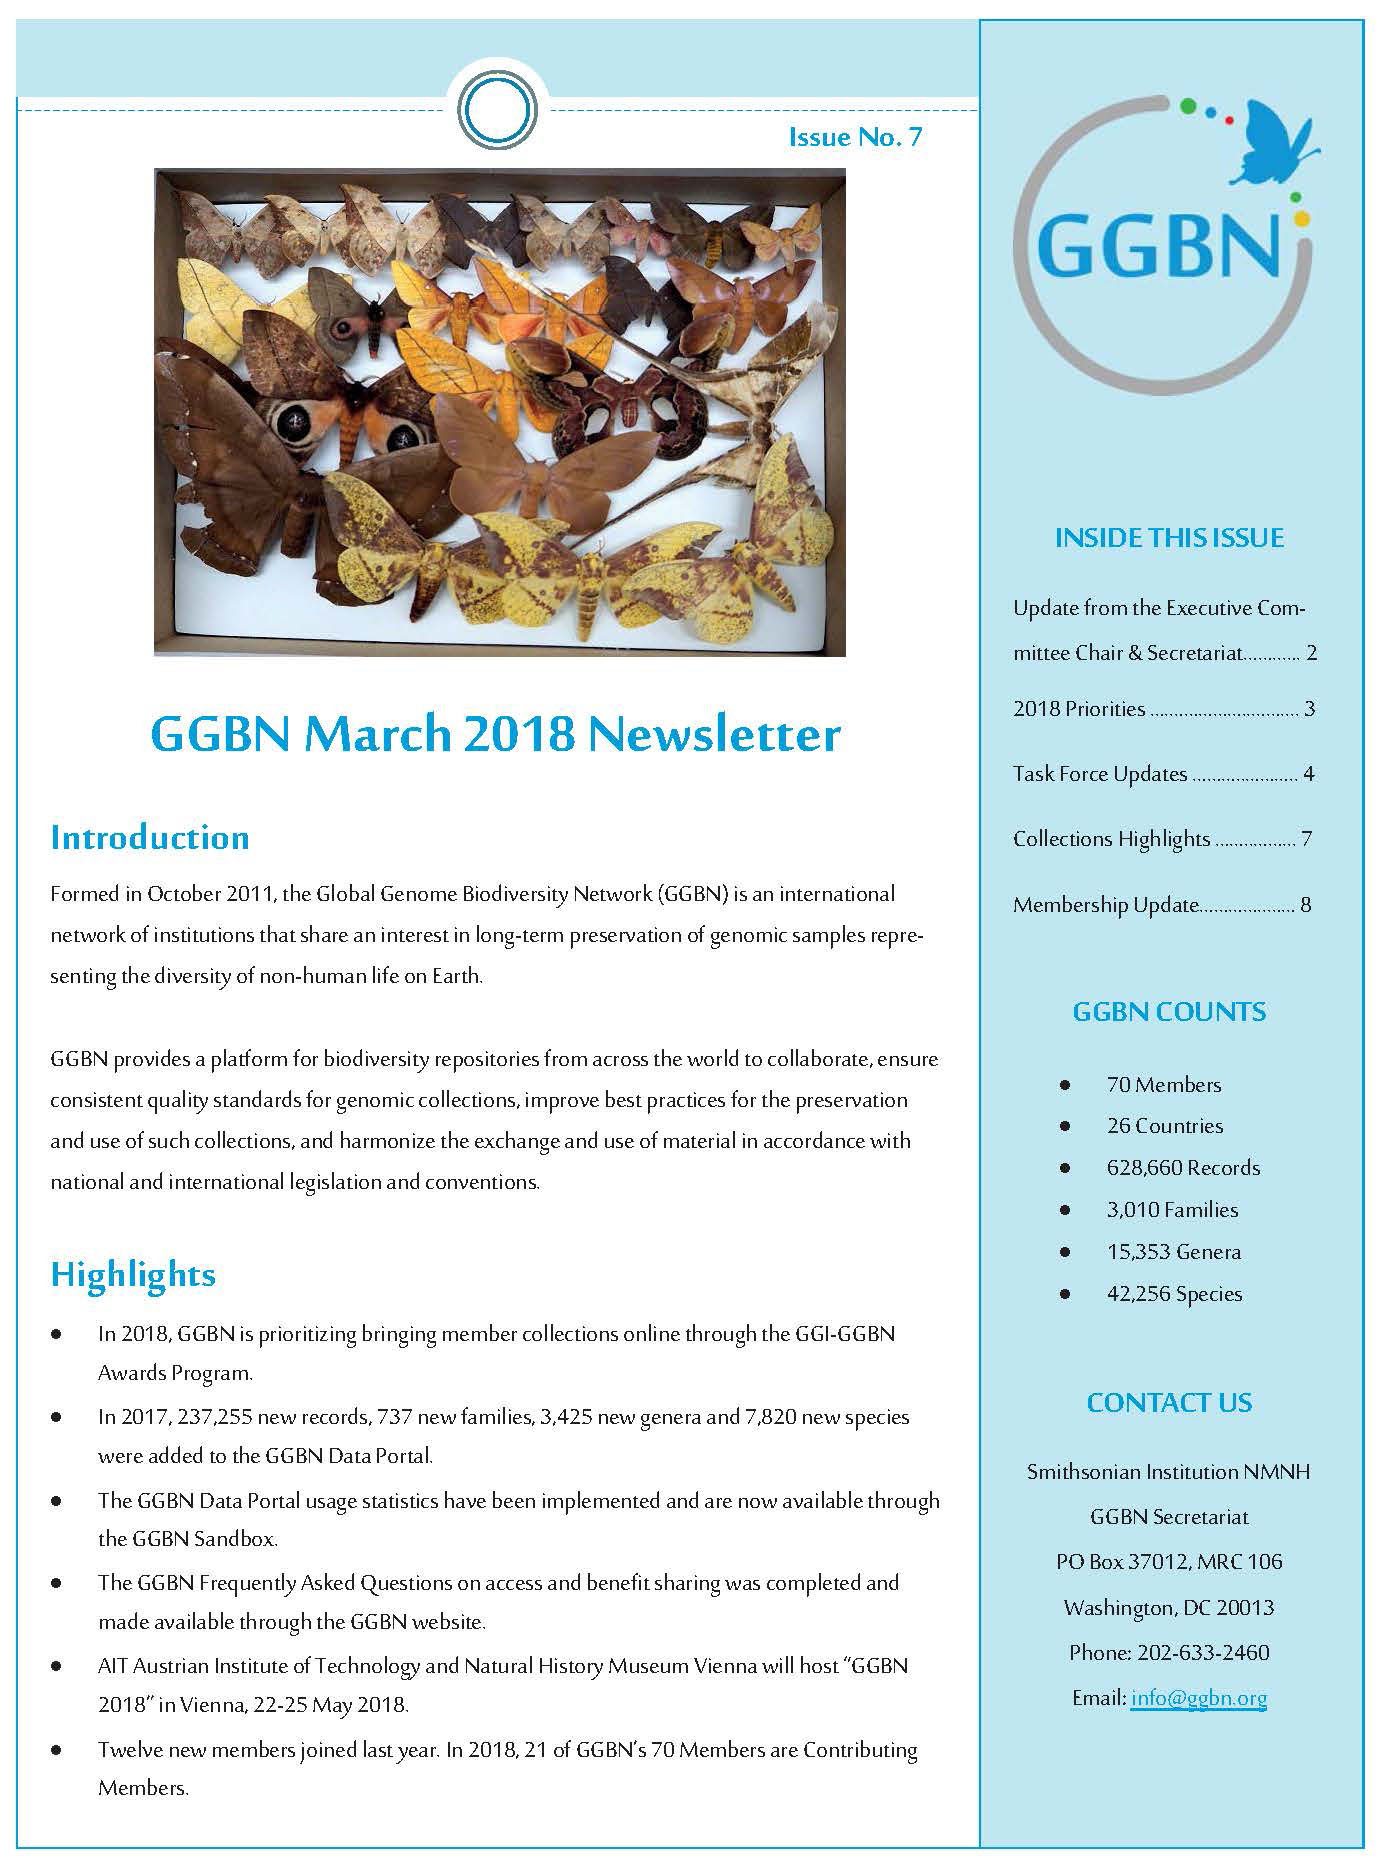 GGBN2018Newsletter.jpg